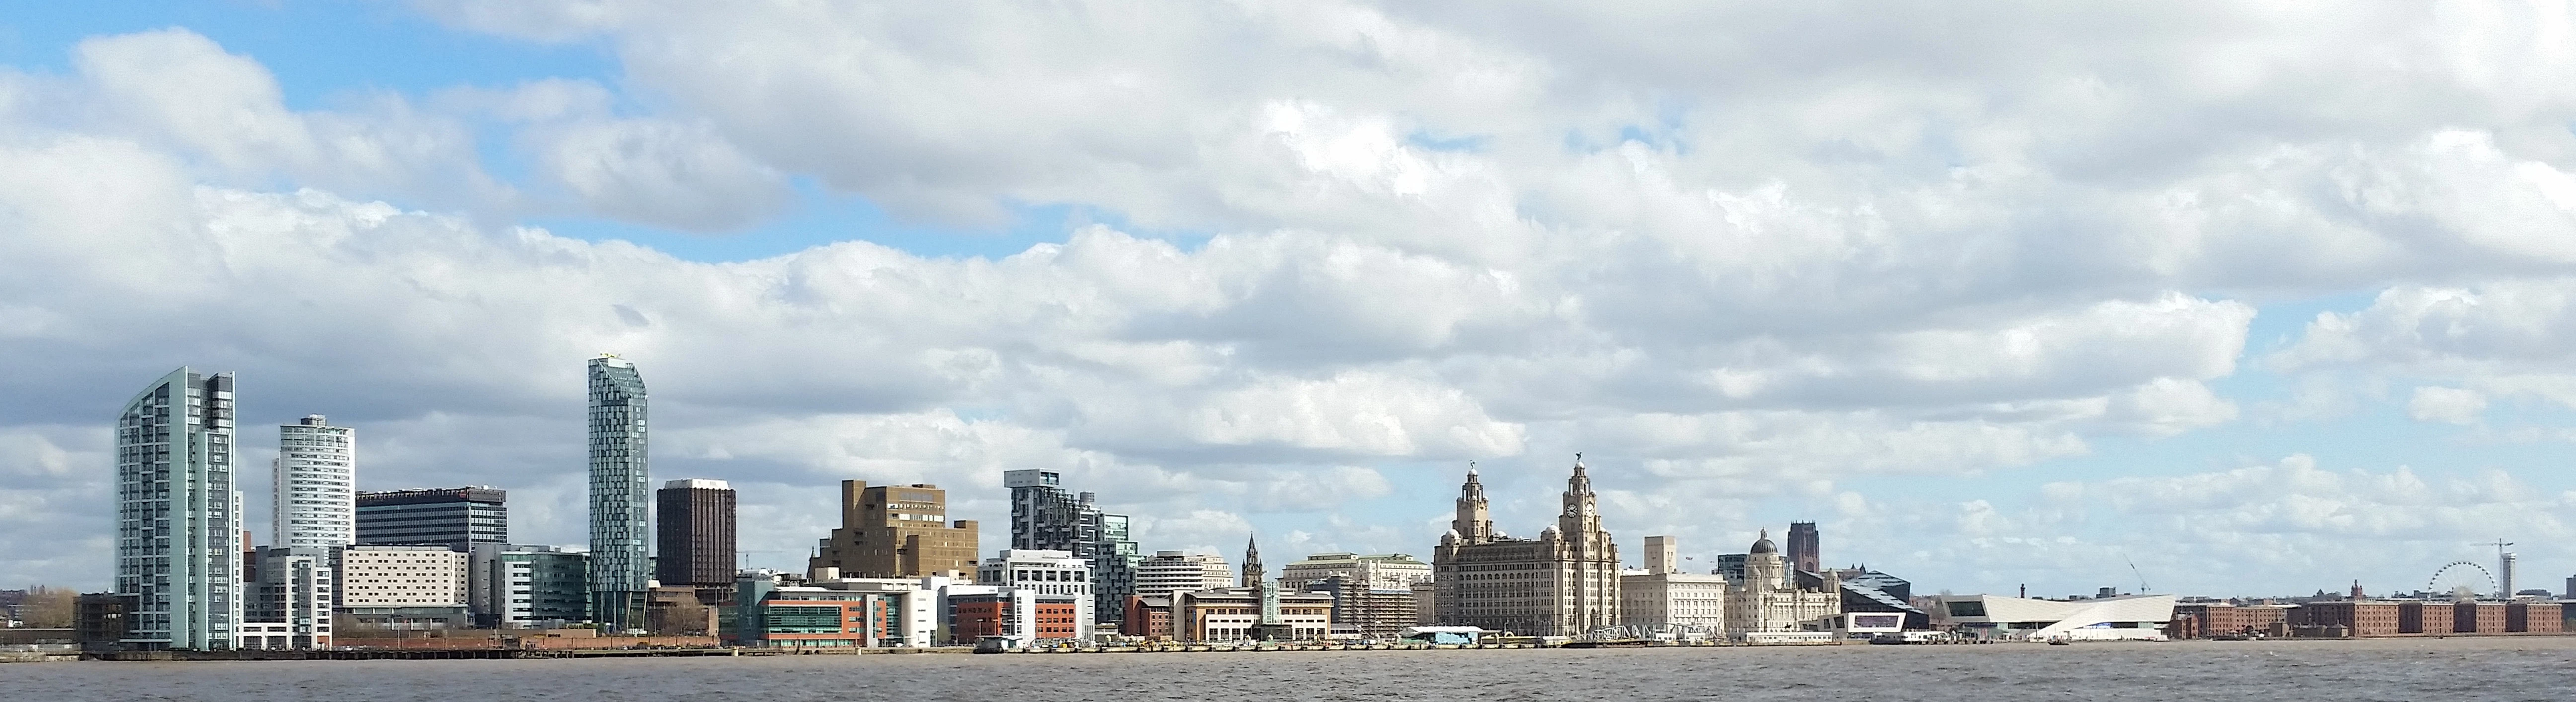 Liverpool - Skyline